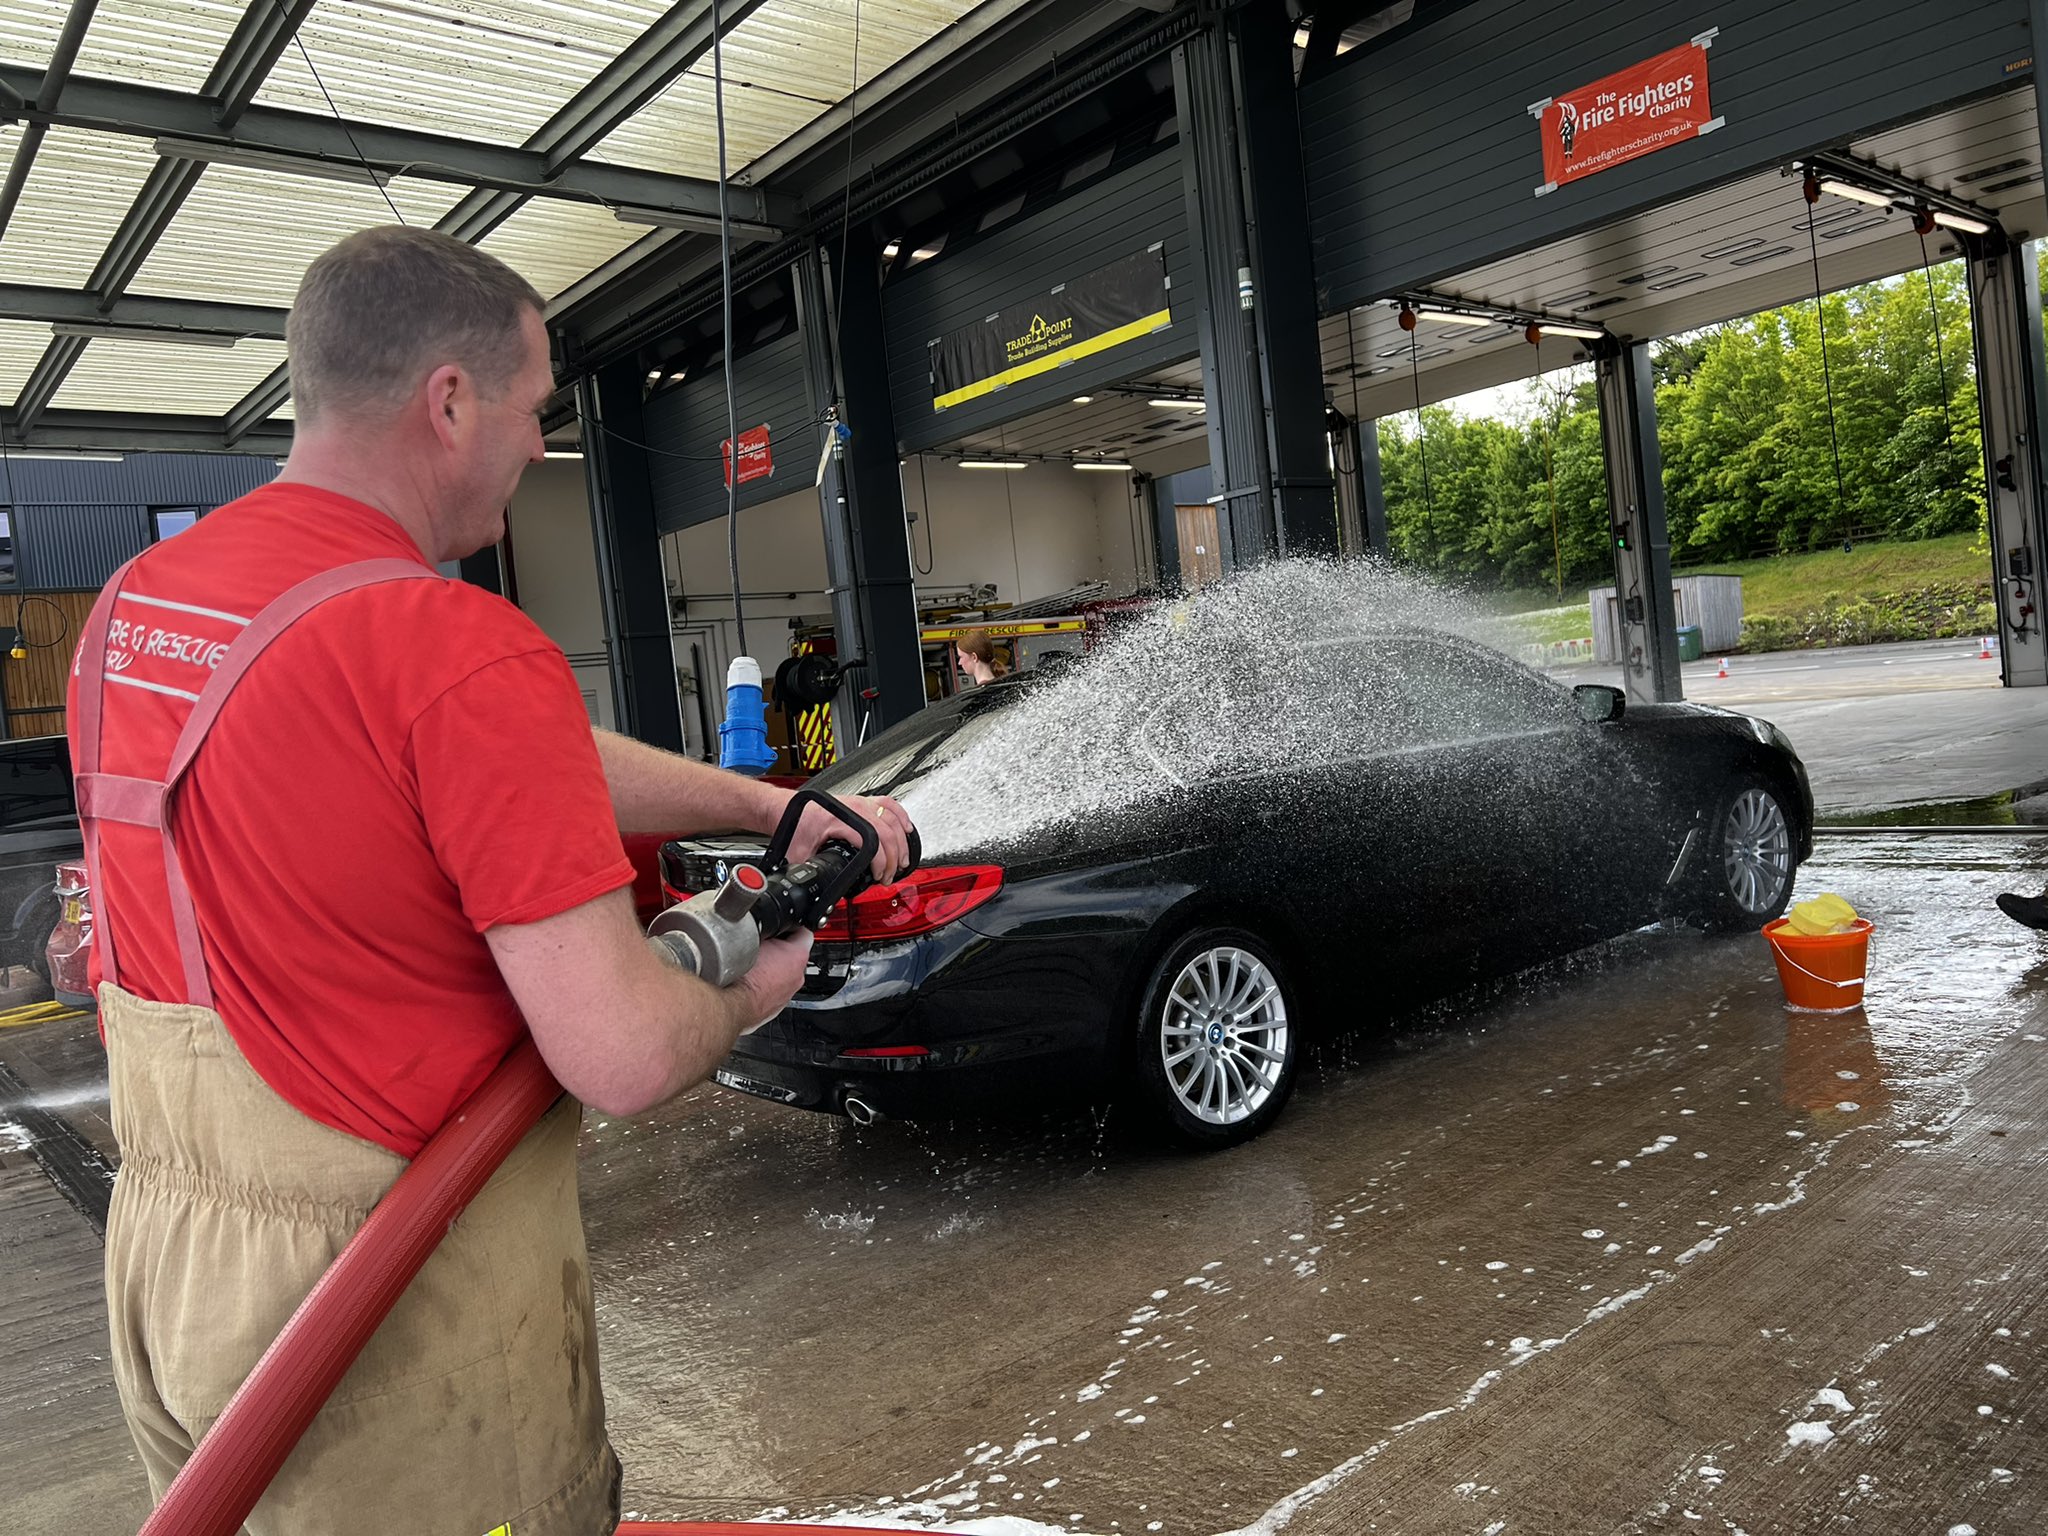 Fire station Car Washes make a big splash